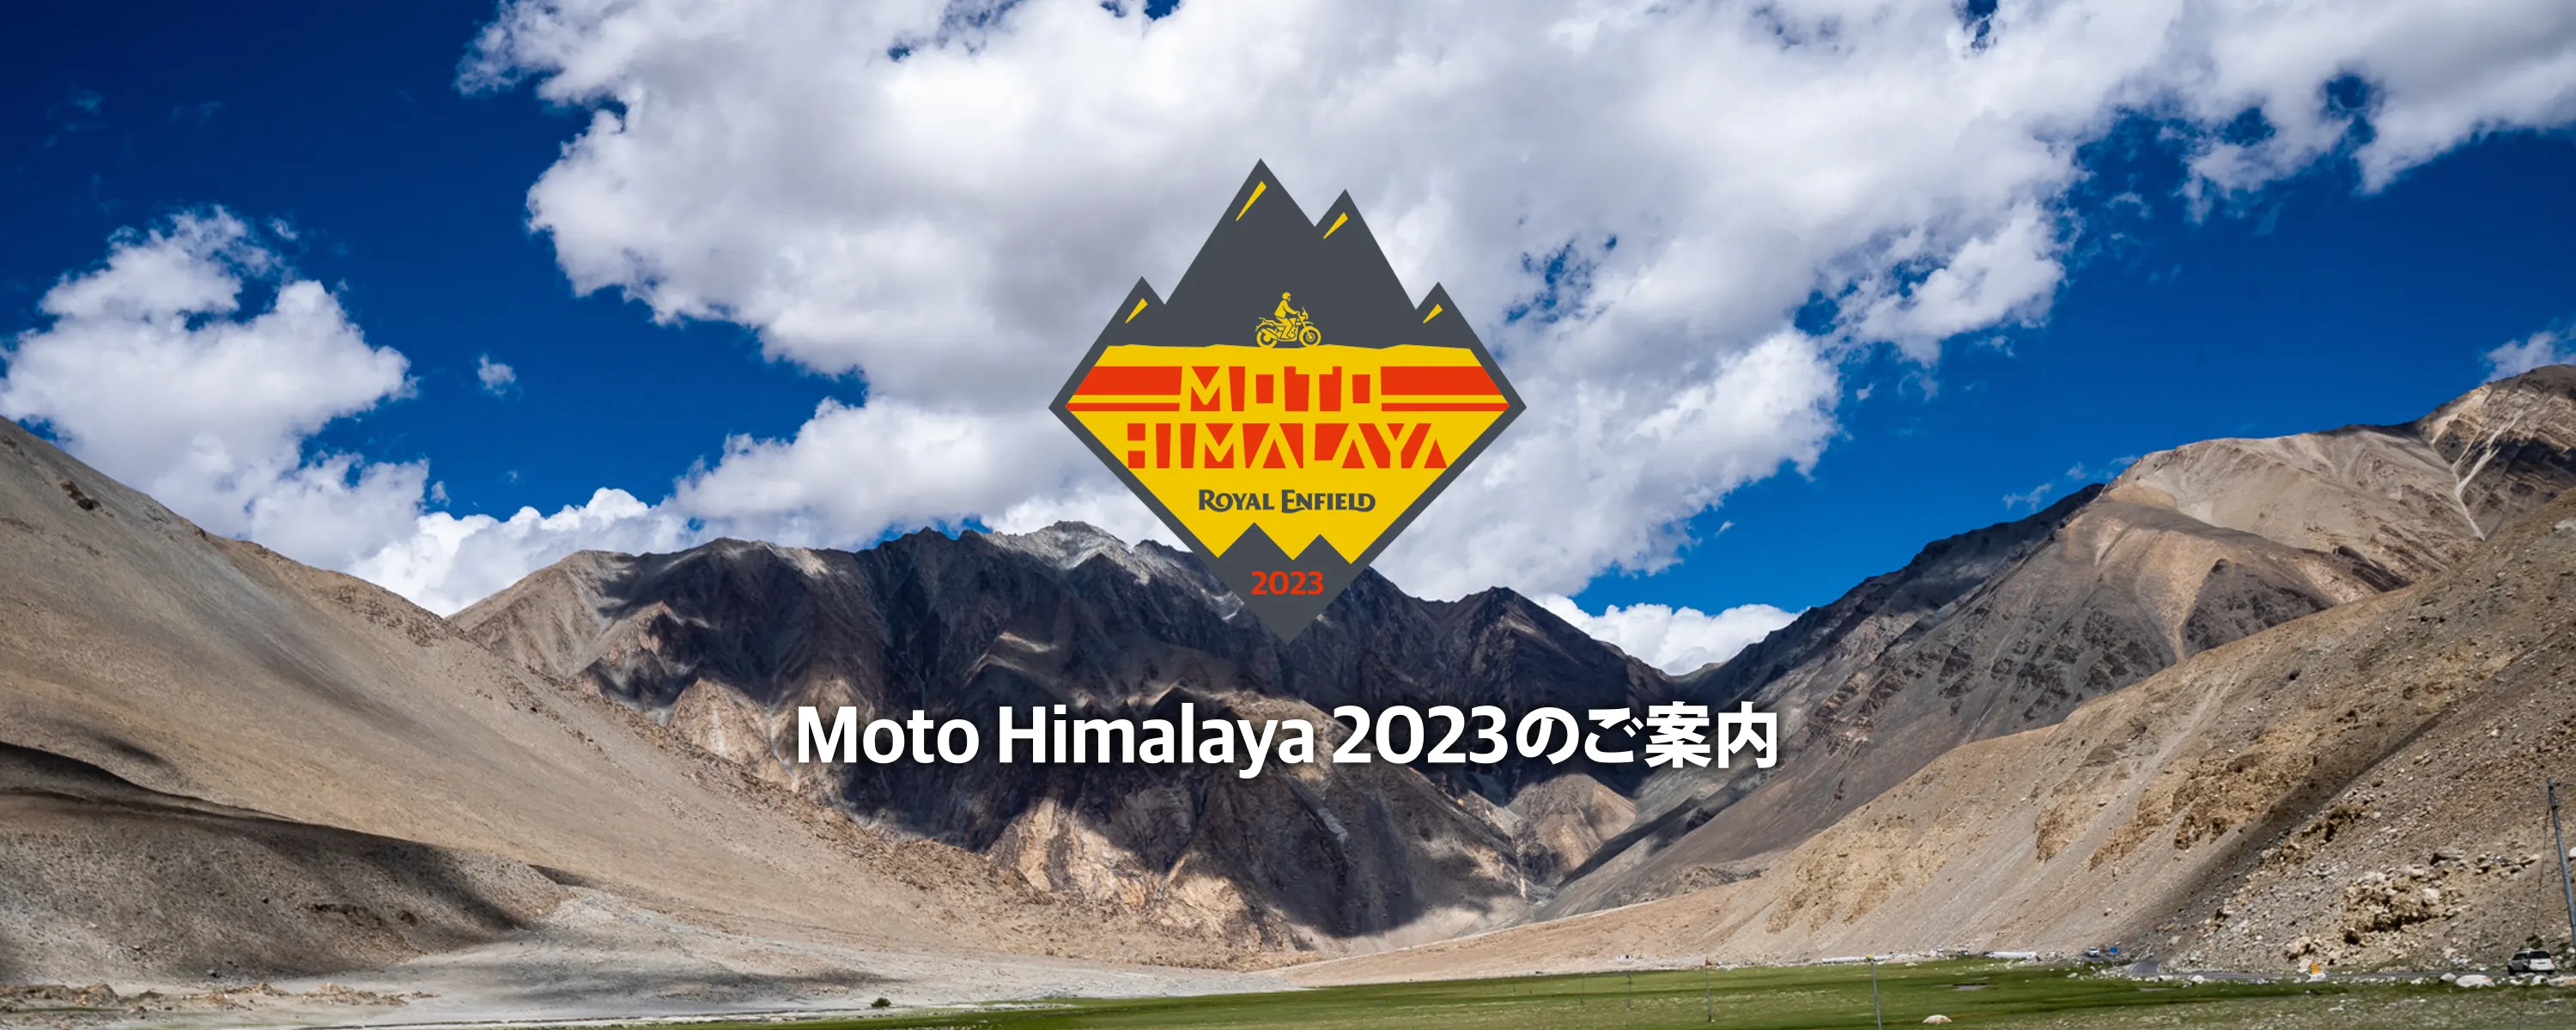 Moto Himalaya 2023のご案内